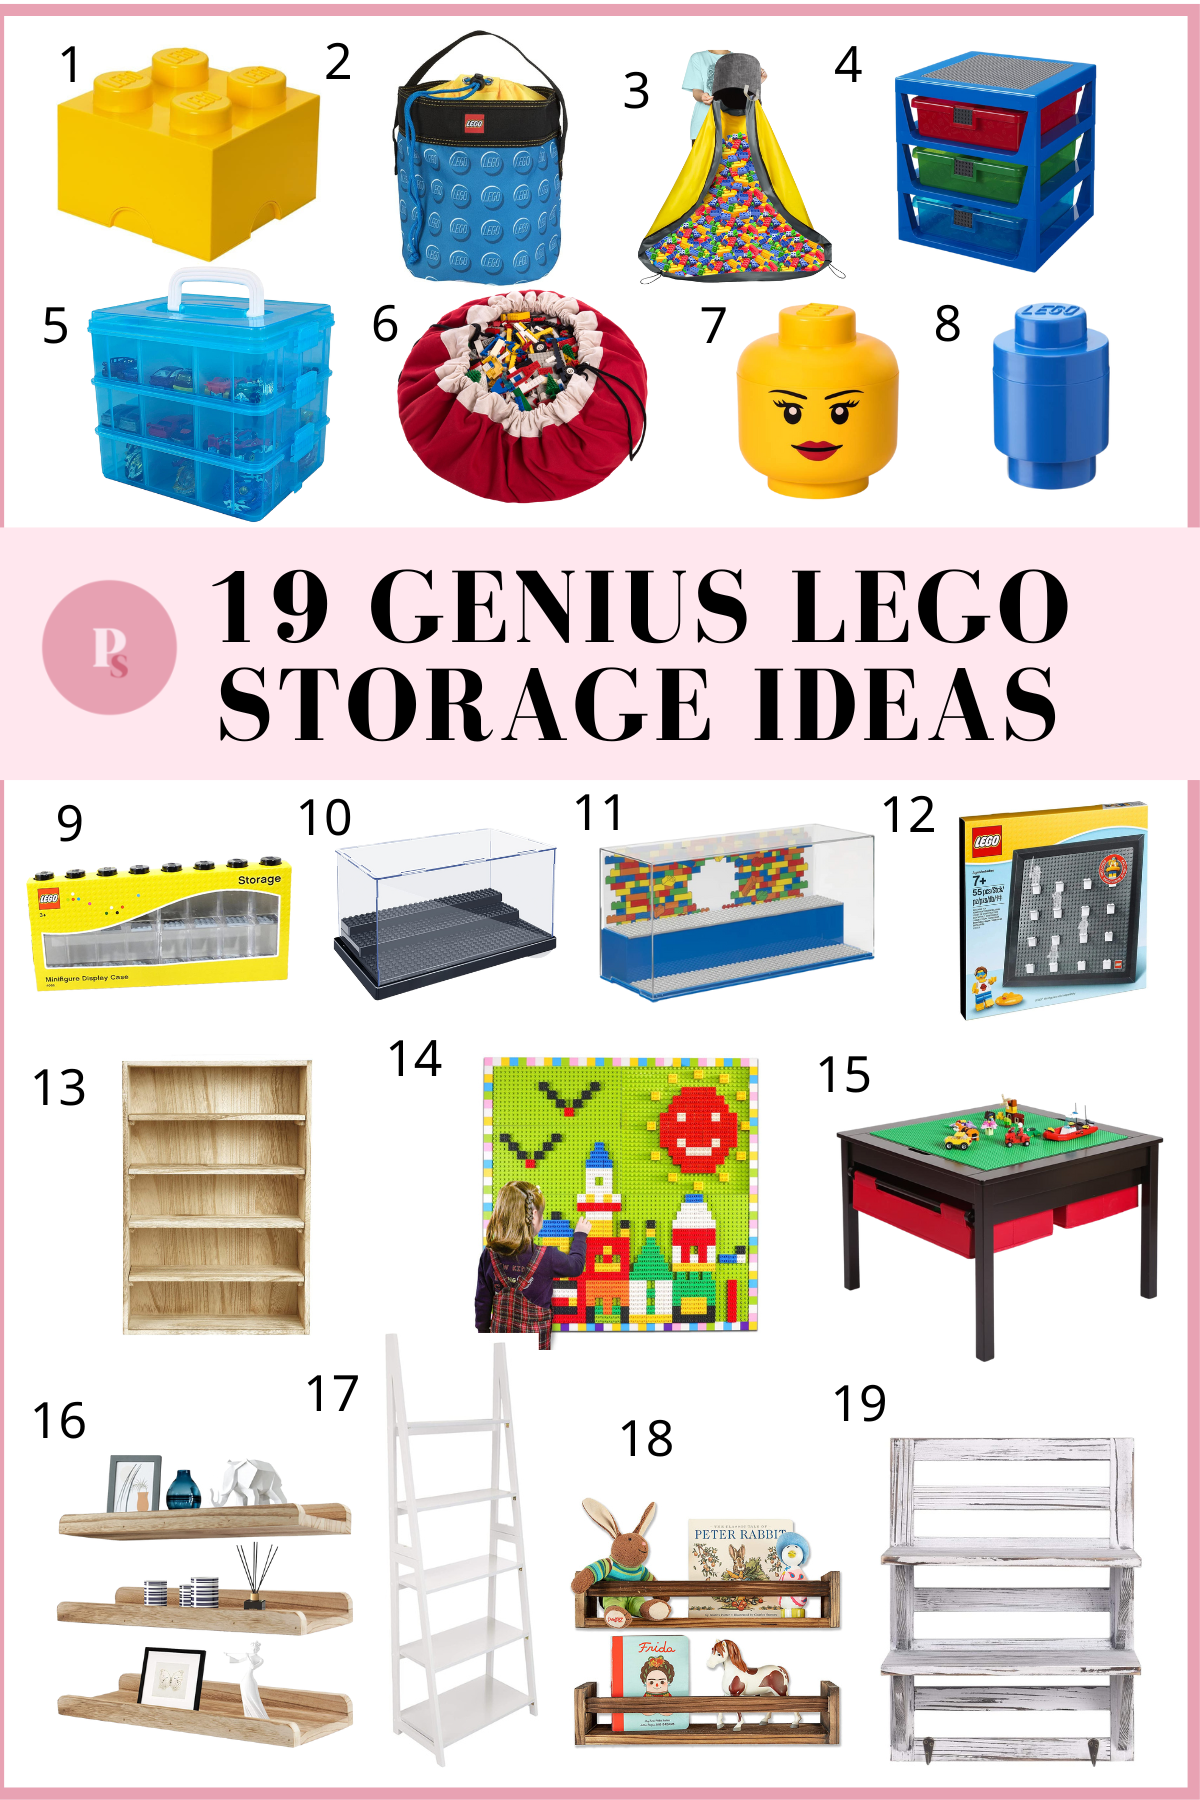 10 easy ideas for Lego Storage